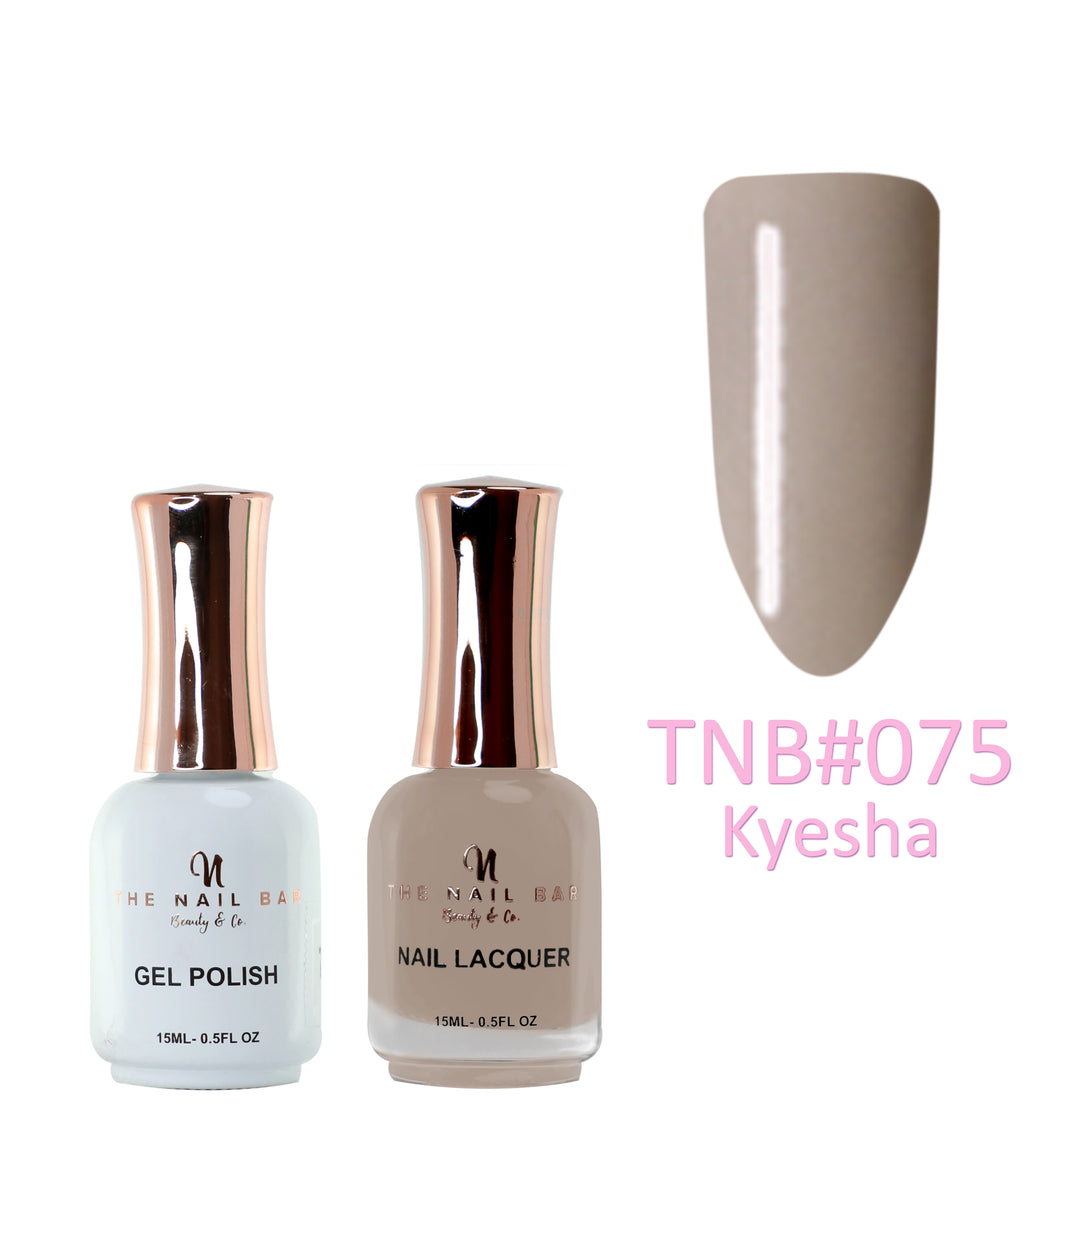 Dual Polish/Gel colour matching (15ml) - Kyesha - The Nail Bar Beauty & Co.